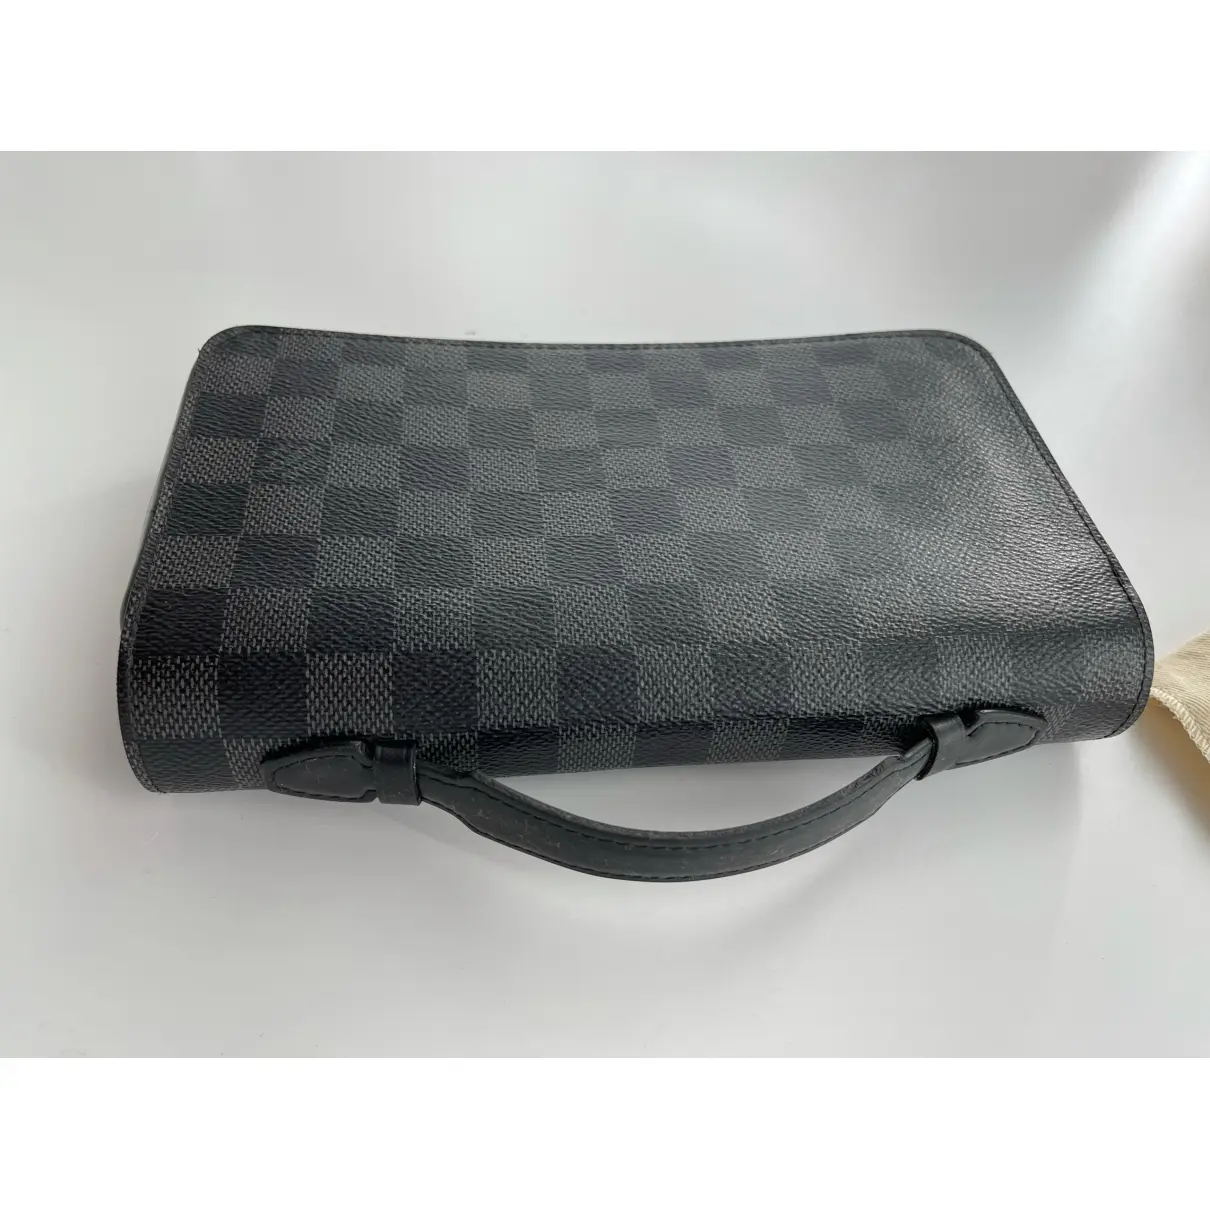 Zippy XL leather small bag Louis Vuitton